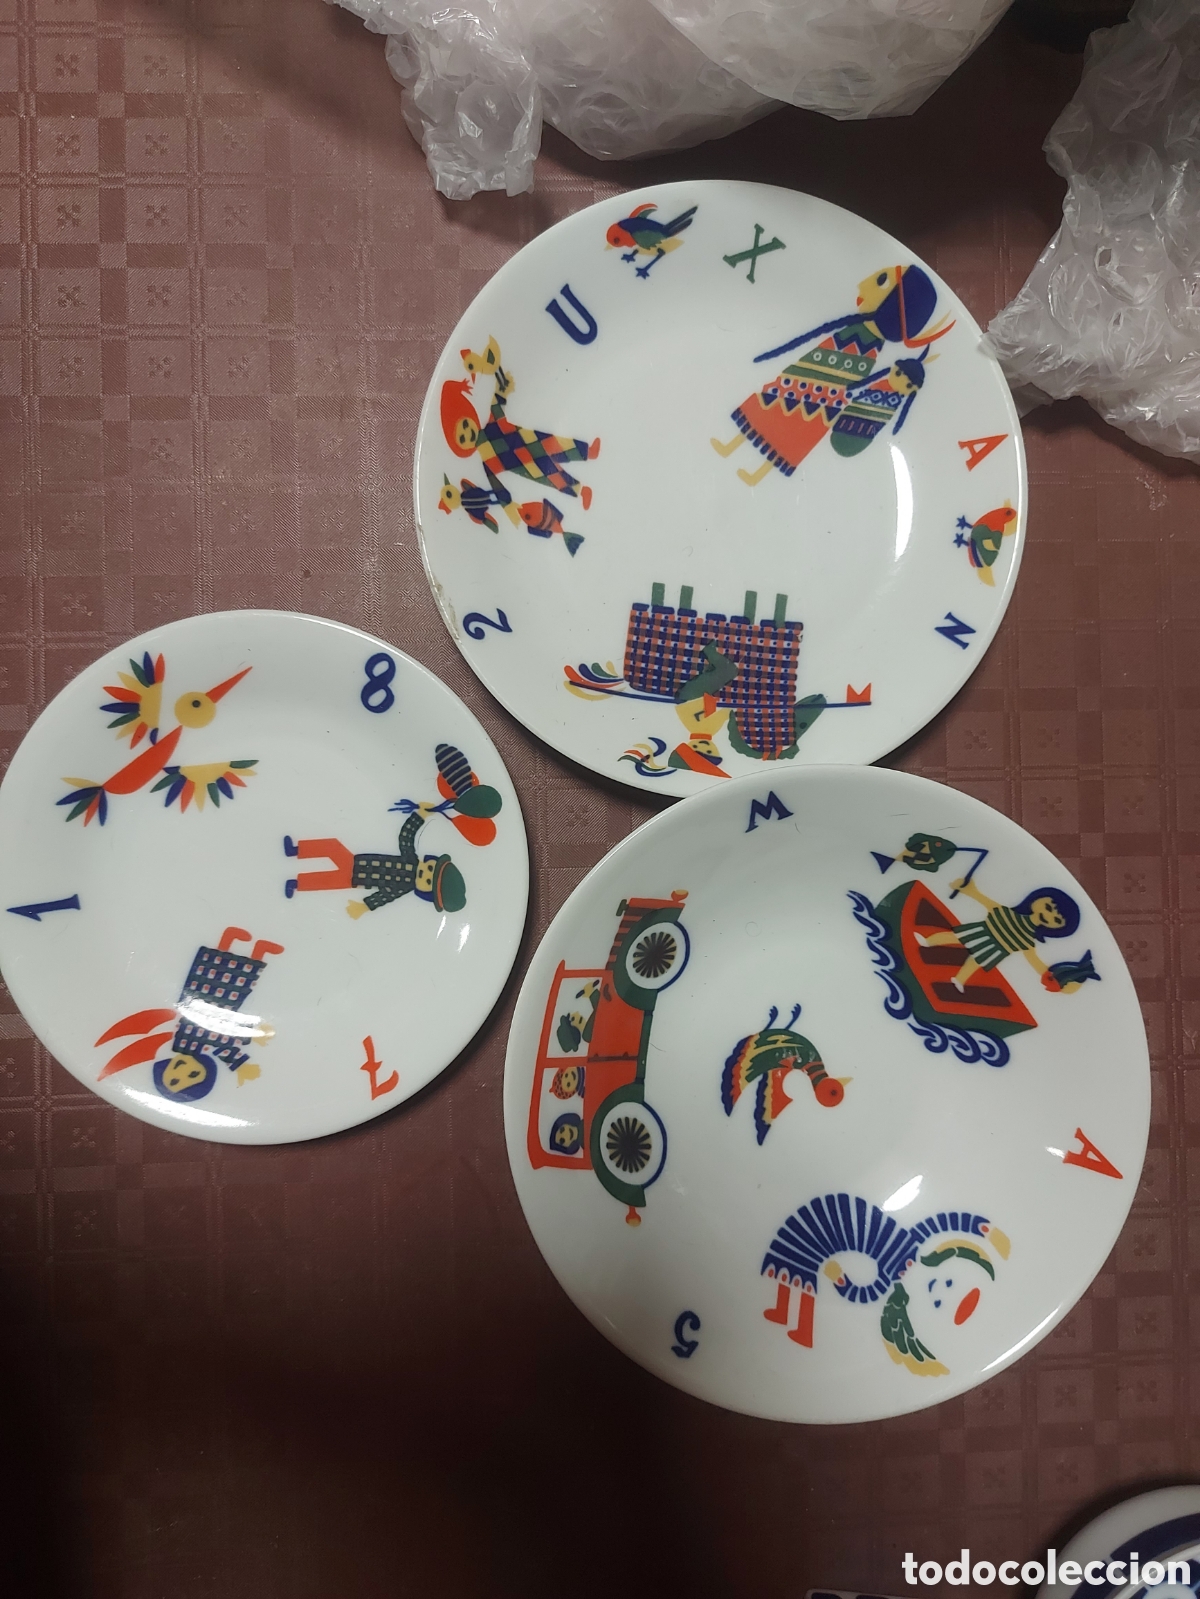 conjunto vajilla 3 platos infantiles de galos - Buy Other antique  porcelain, ceramics and pottery objects on todocoleccion